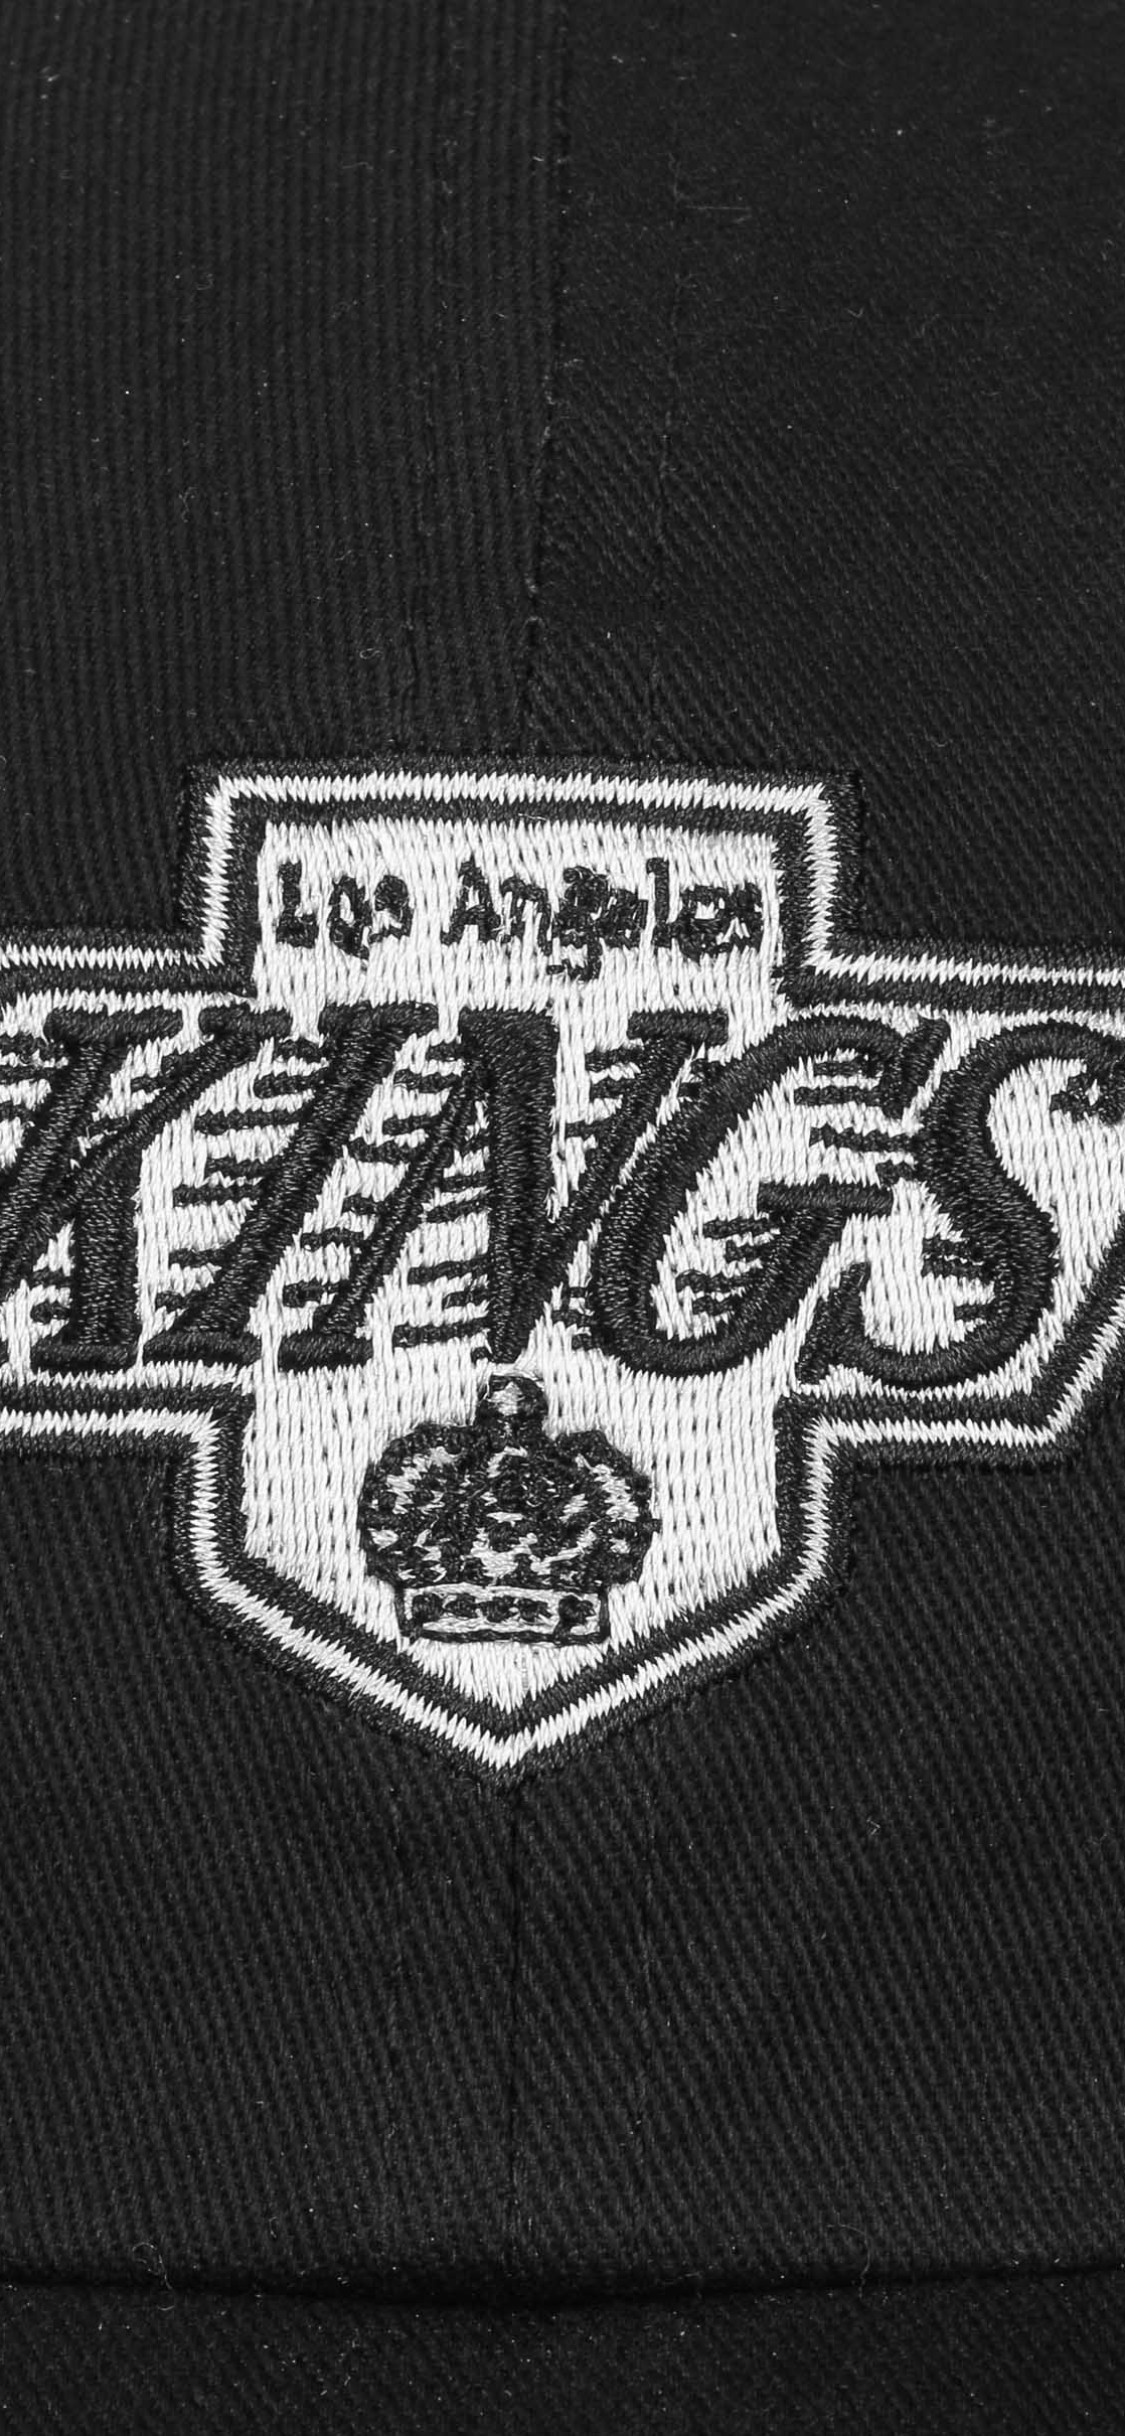 1125x2436 Download La kings 1998 roster, La kings 1990 roster wallpaper